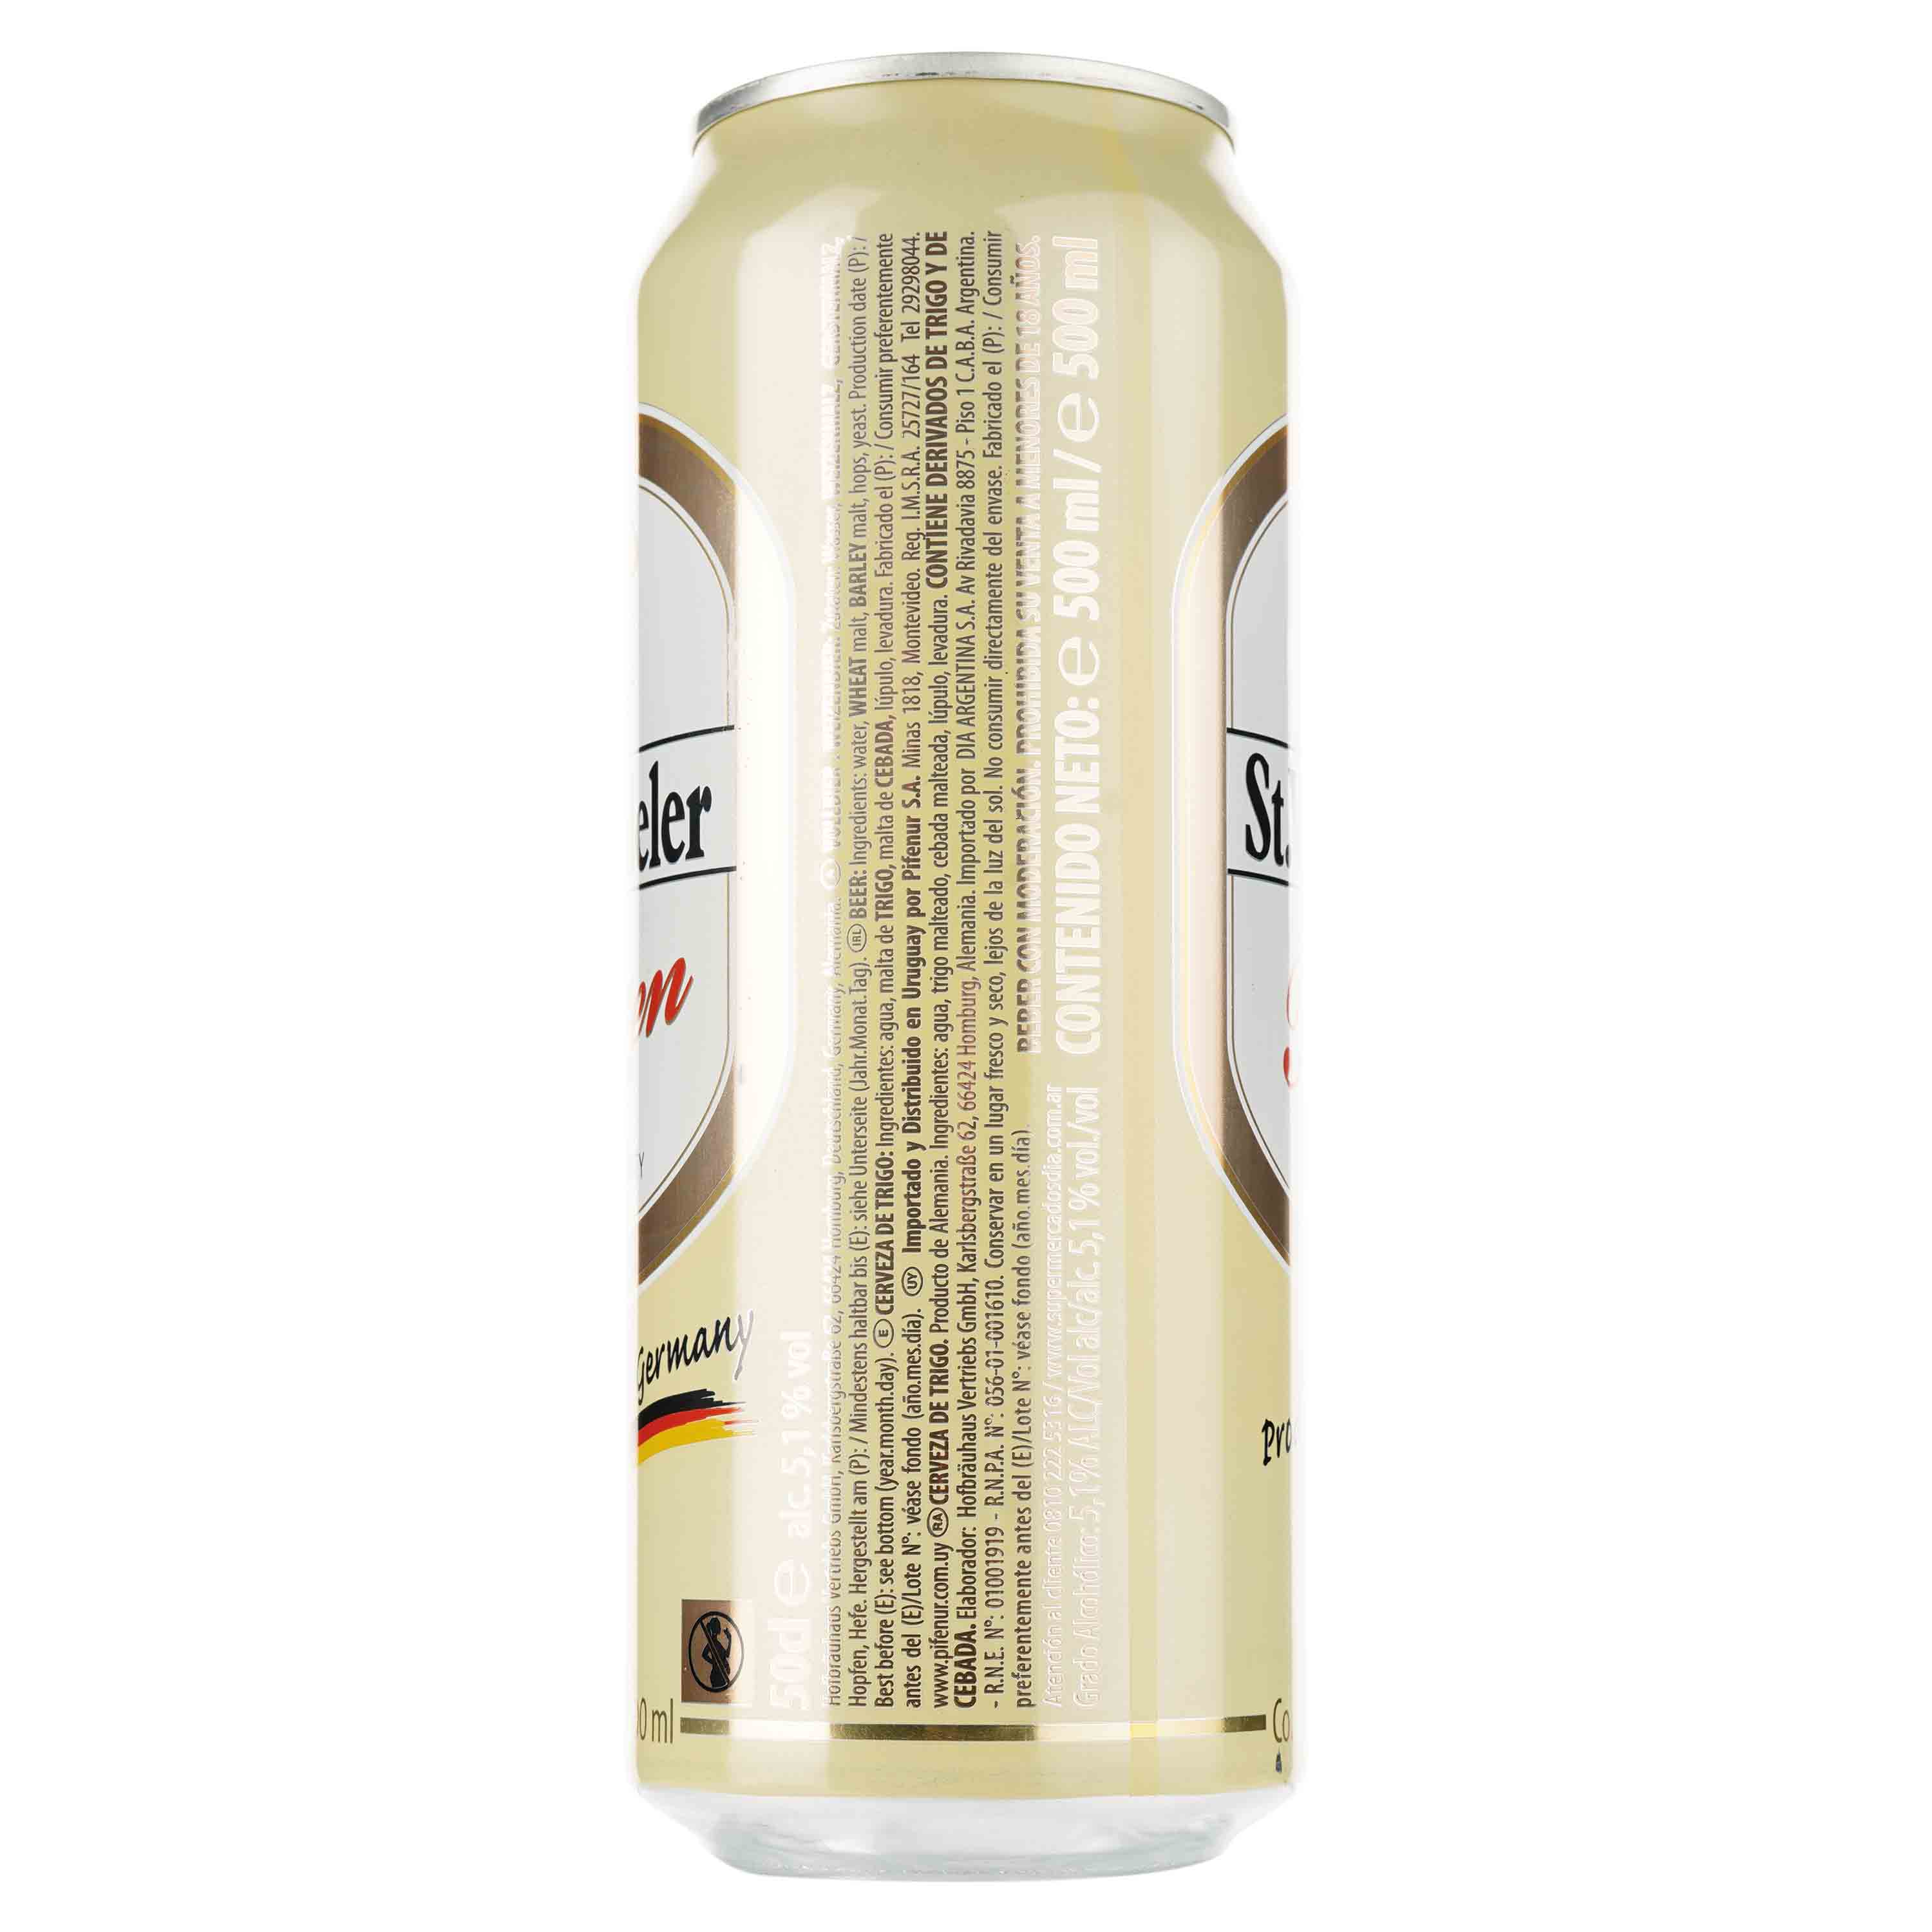 Пиво St.Wendeler Weizen світле, 5.1%, з/б, 0.5 л - фото 2